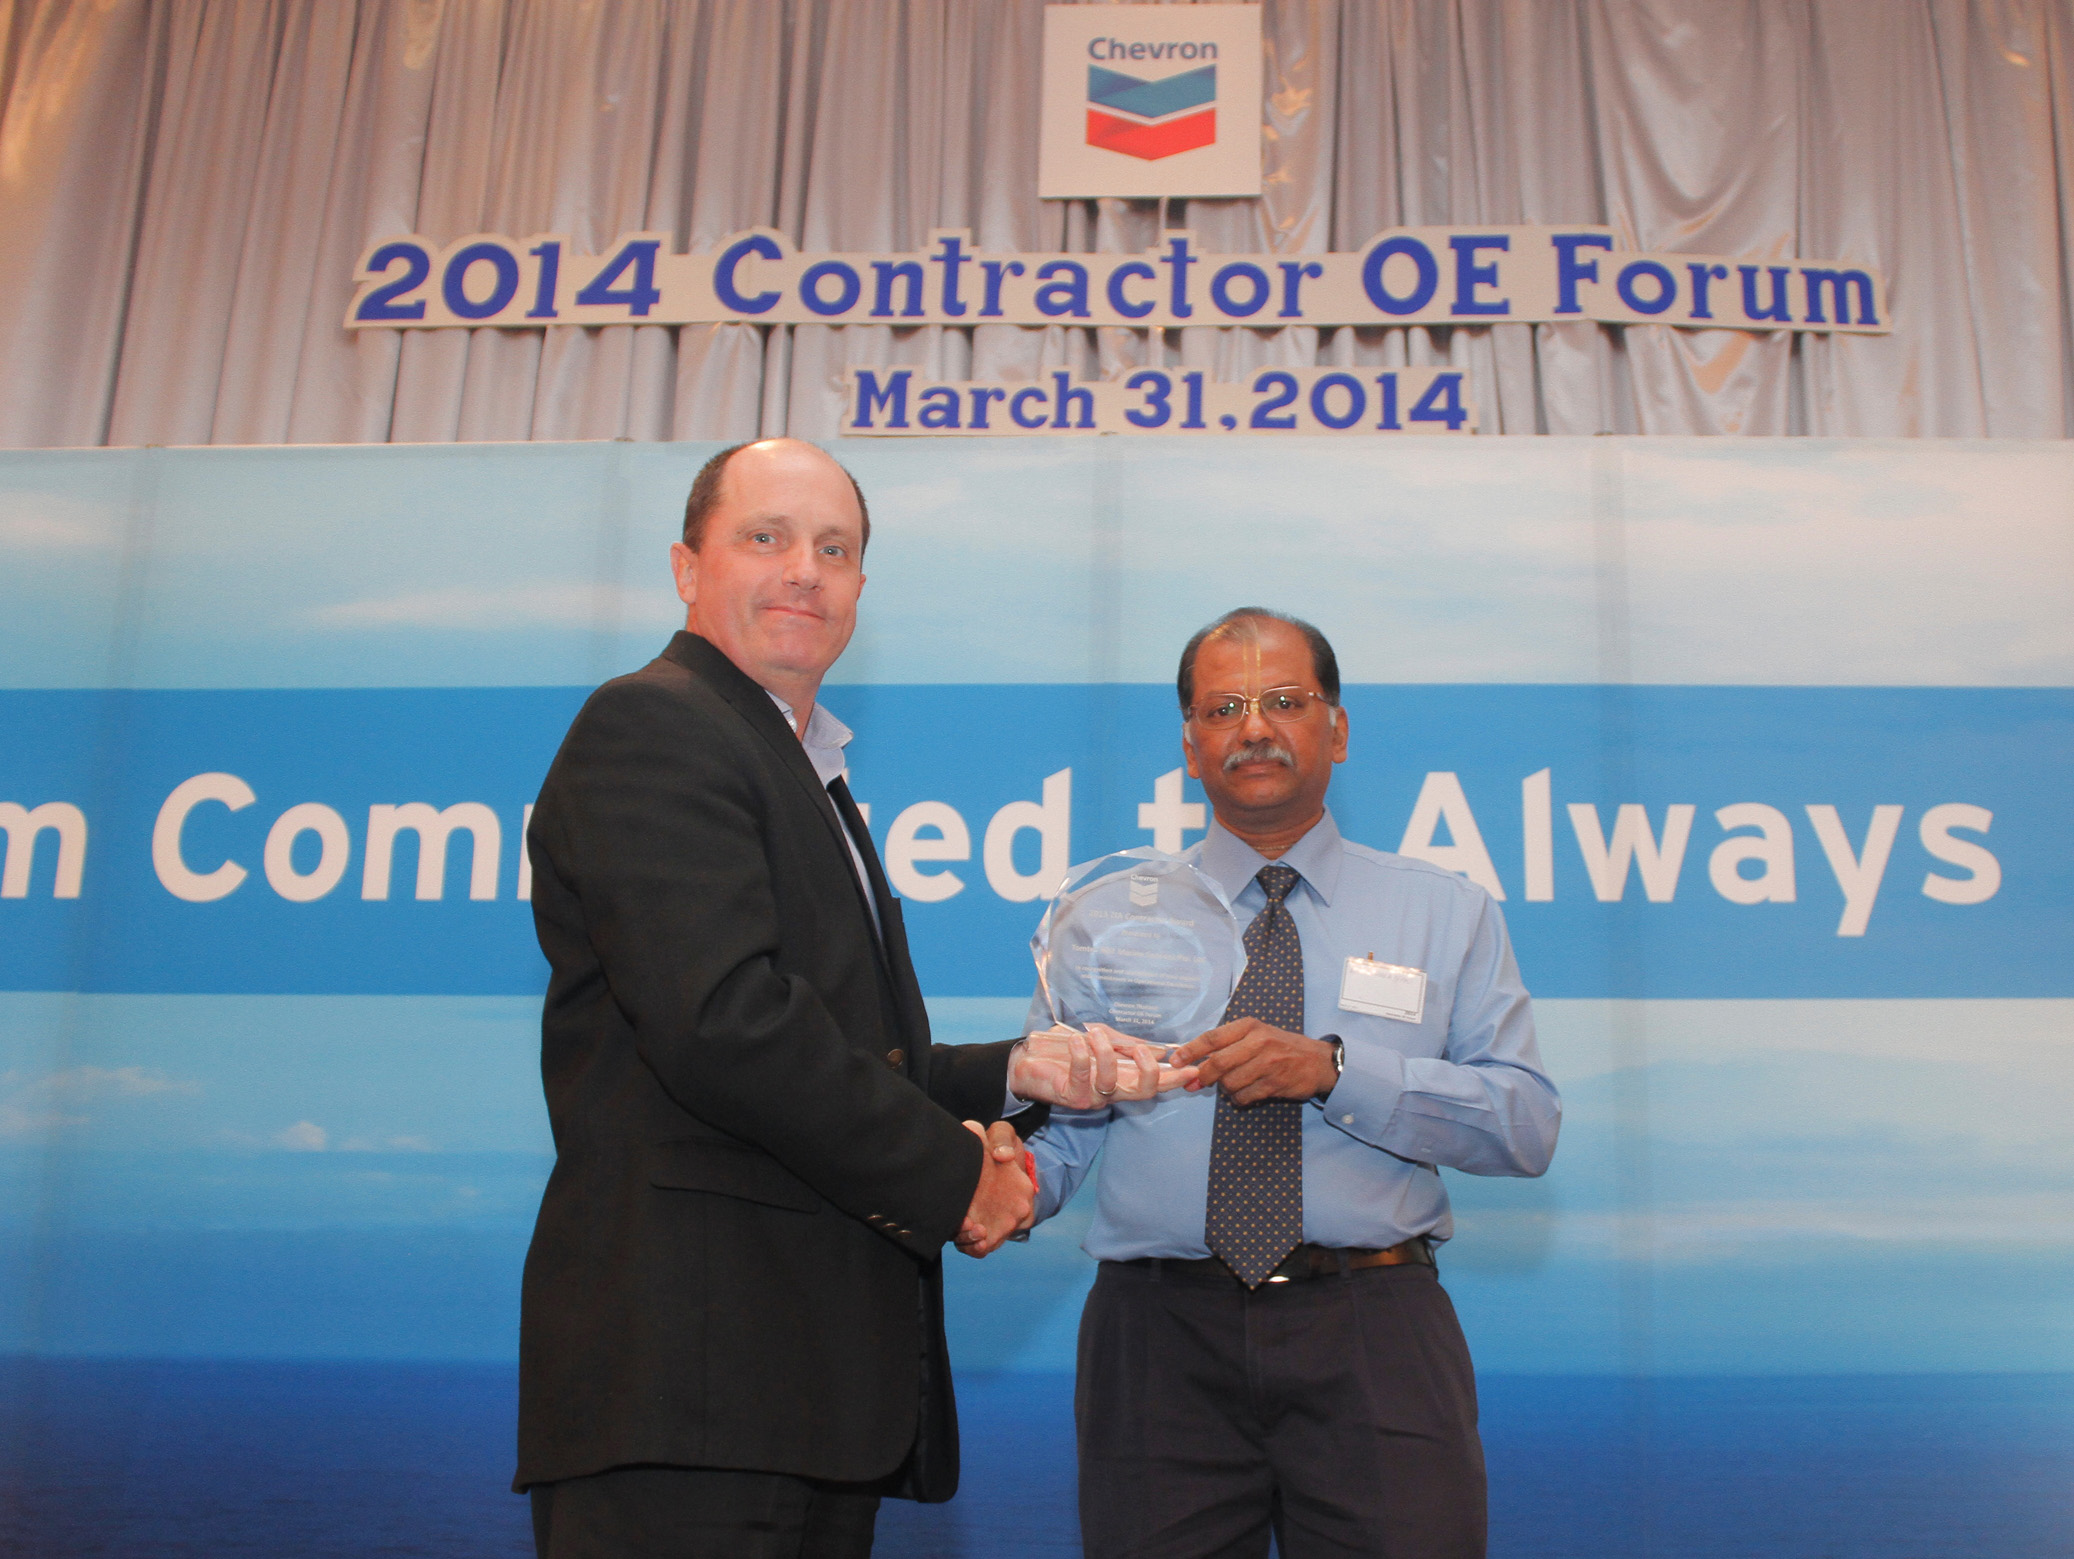 Chervon Contractor Award 2014